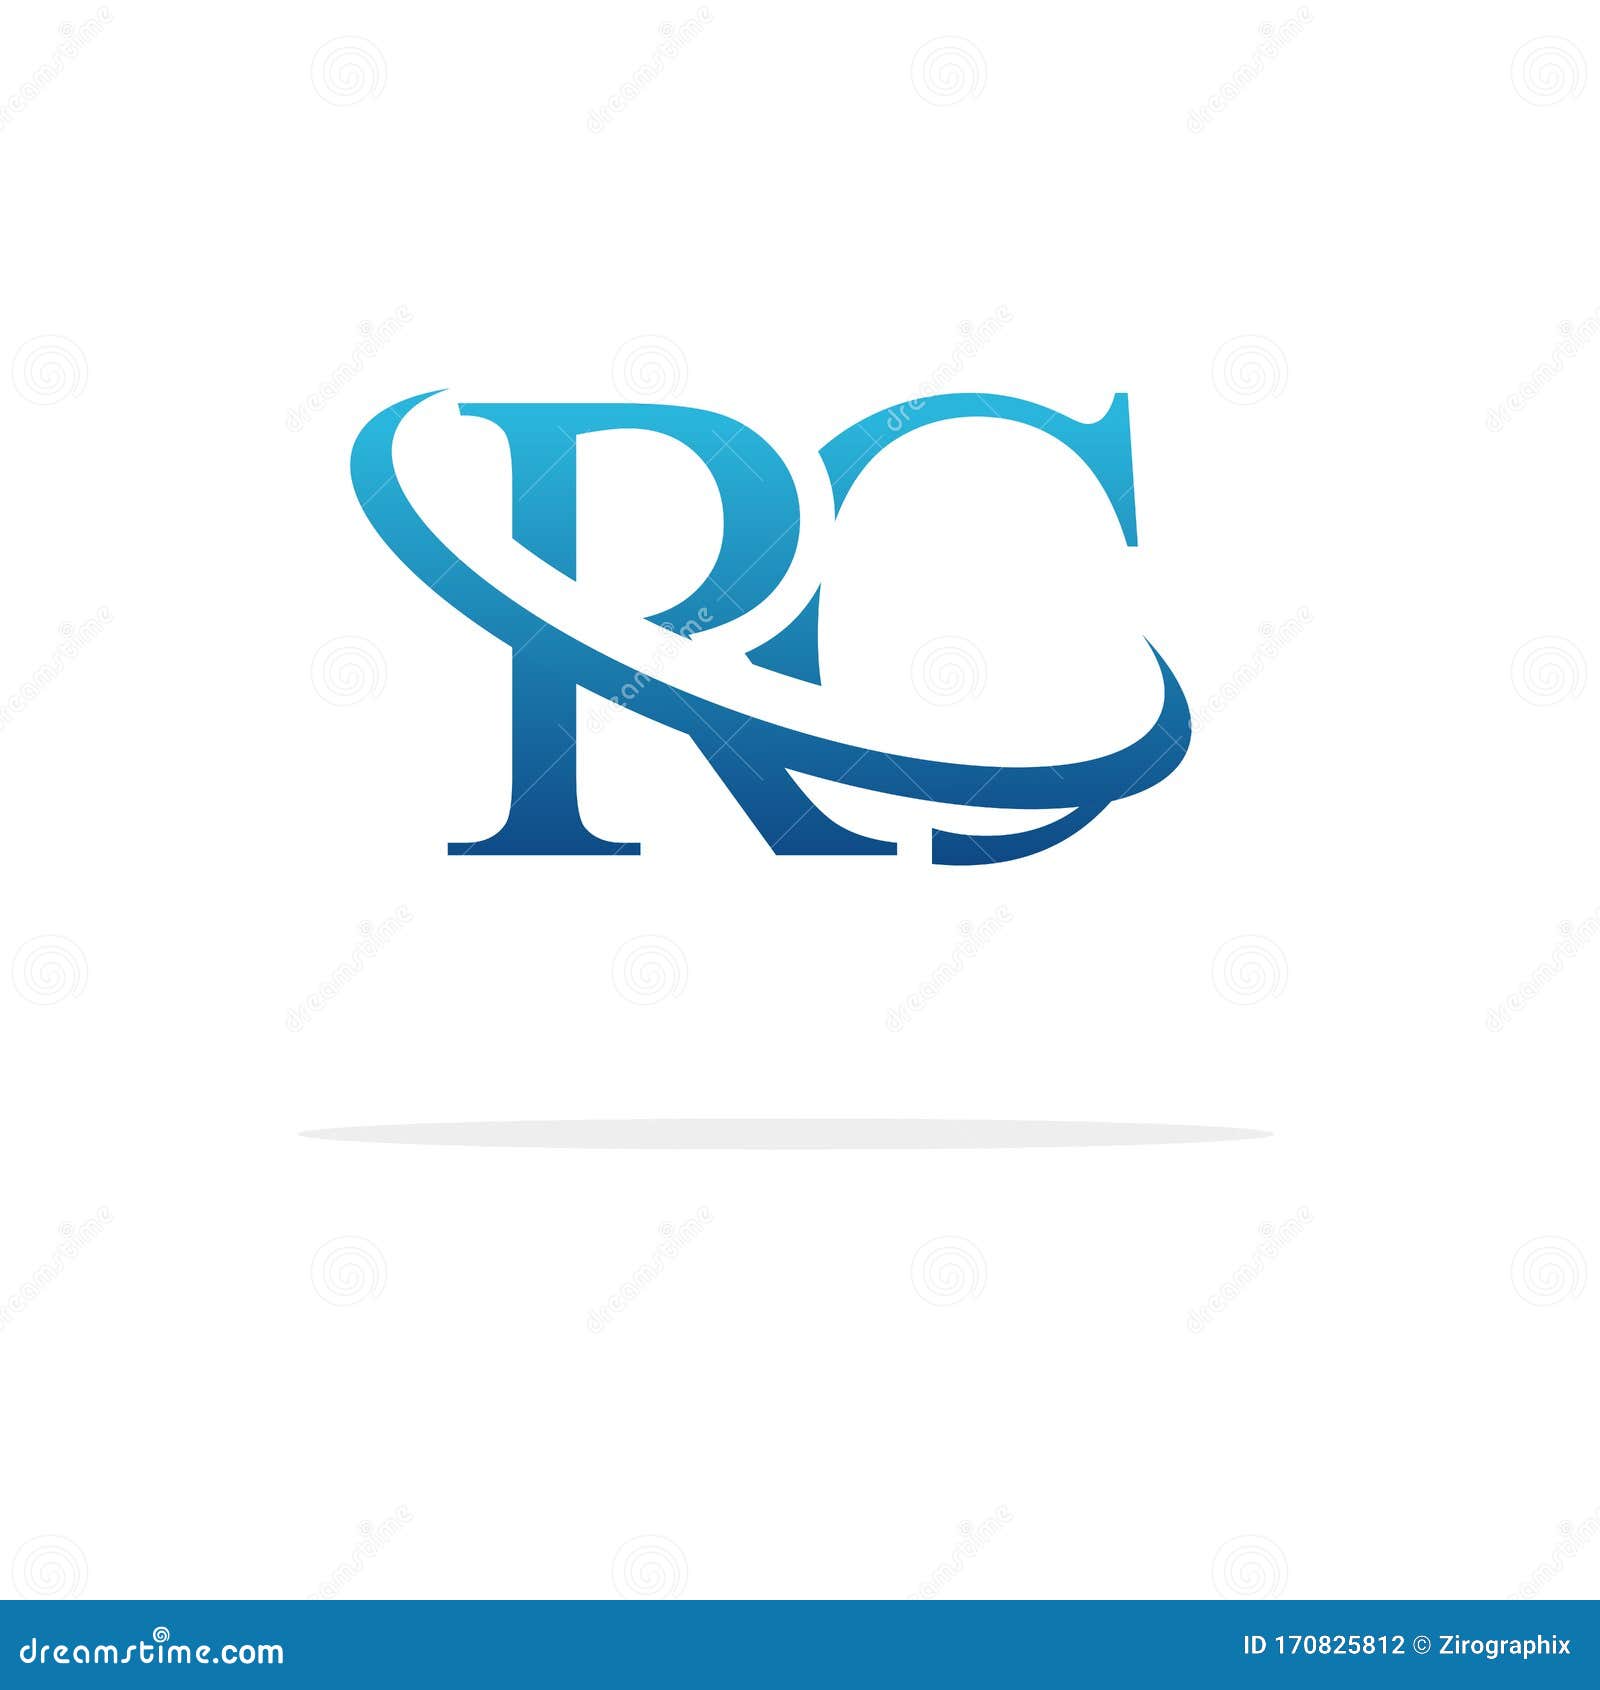 Rc Logo Stock Illustrations 1 237 Rc Logo Stock Illustrations Vectors Clipart Dreamstime